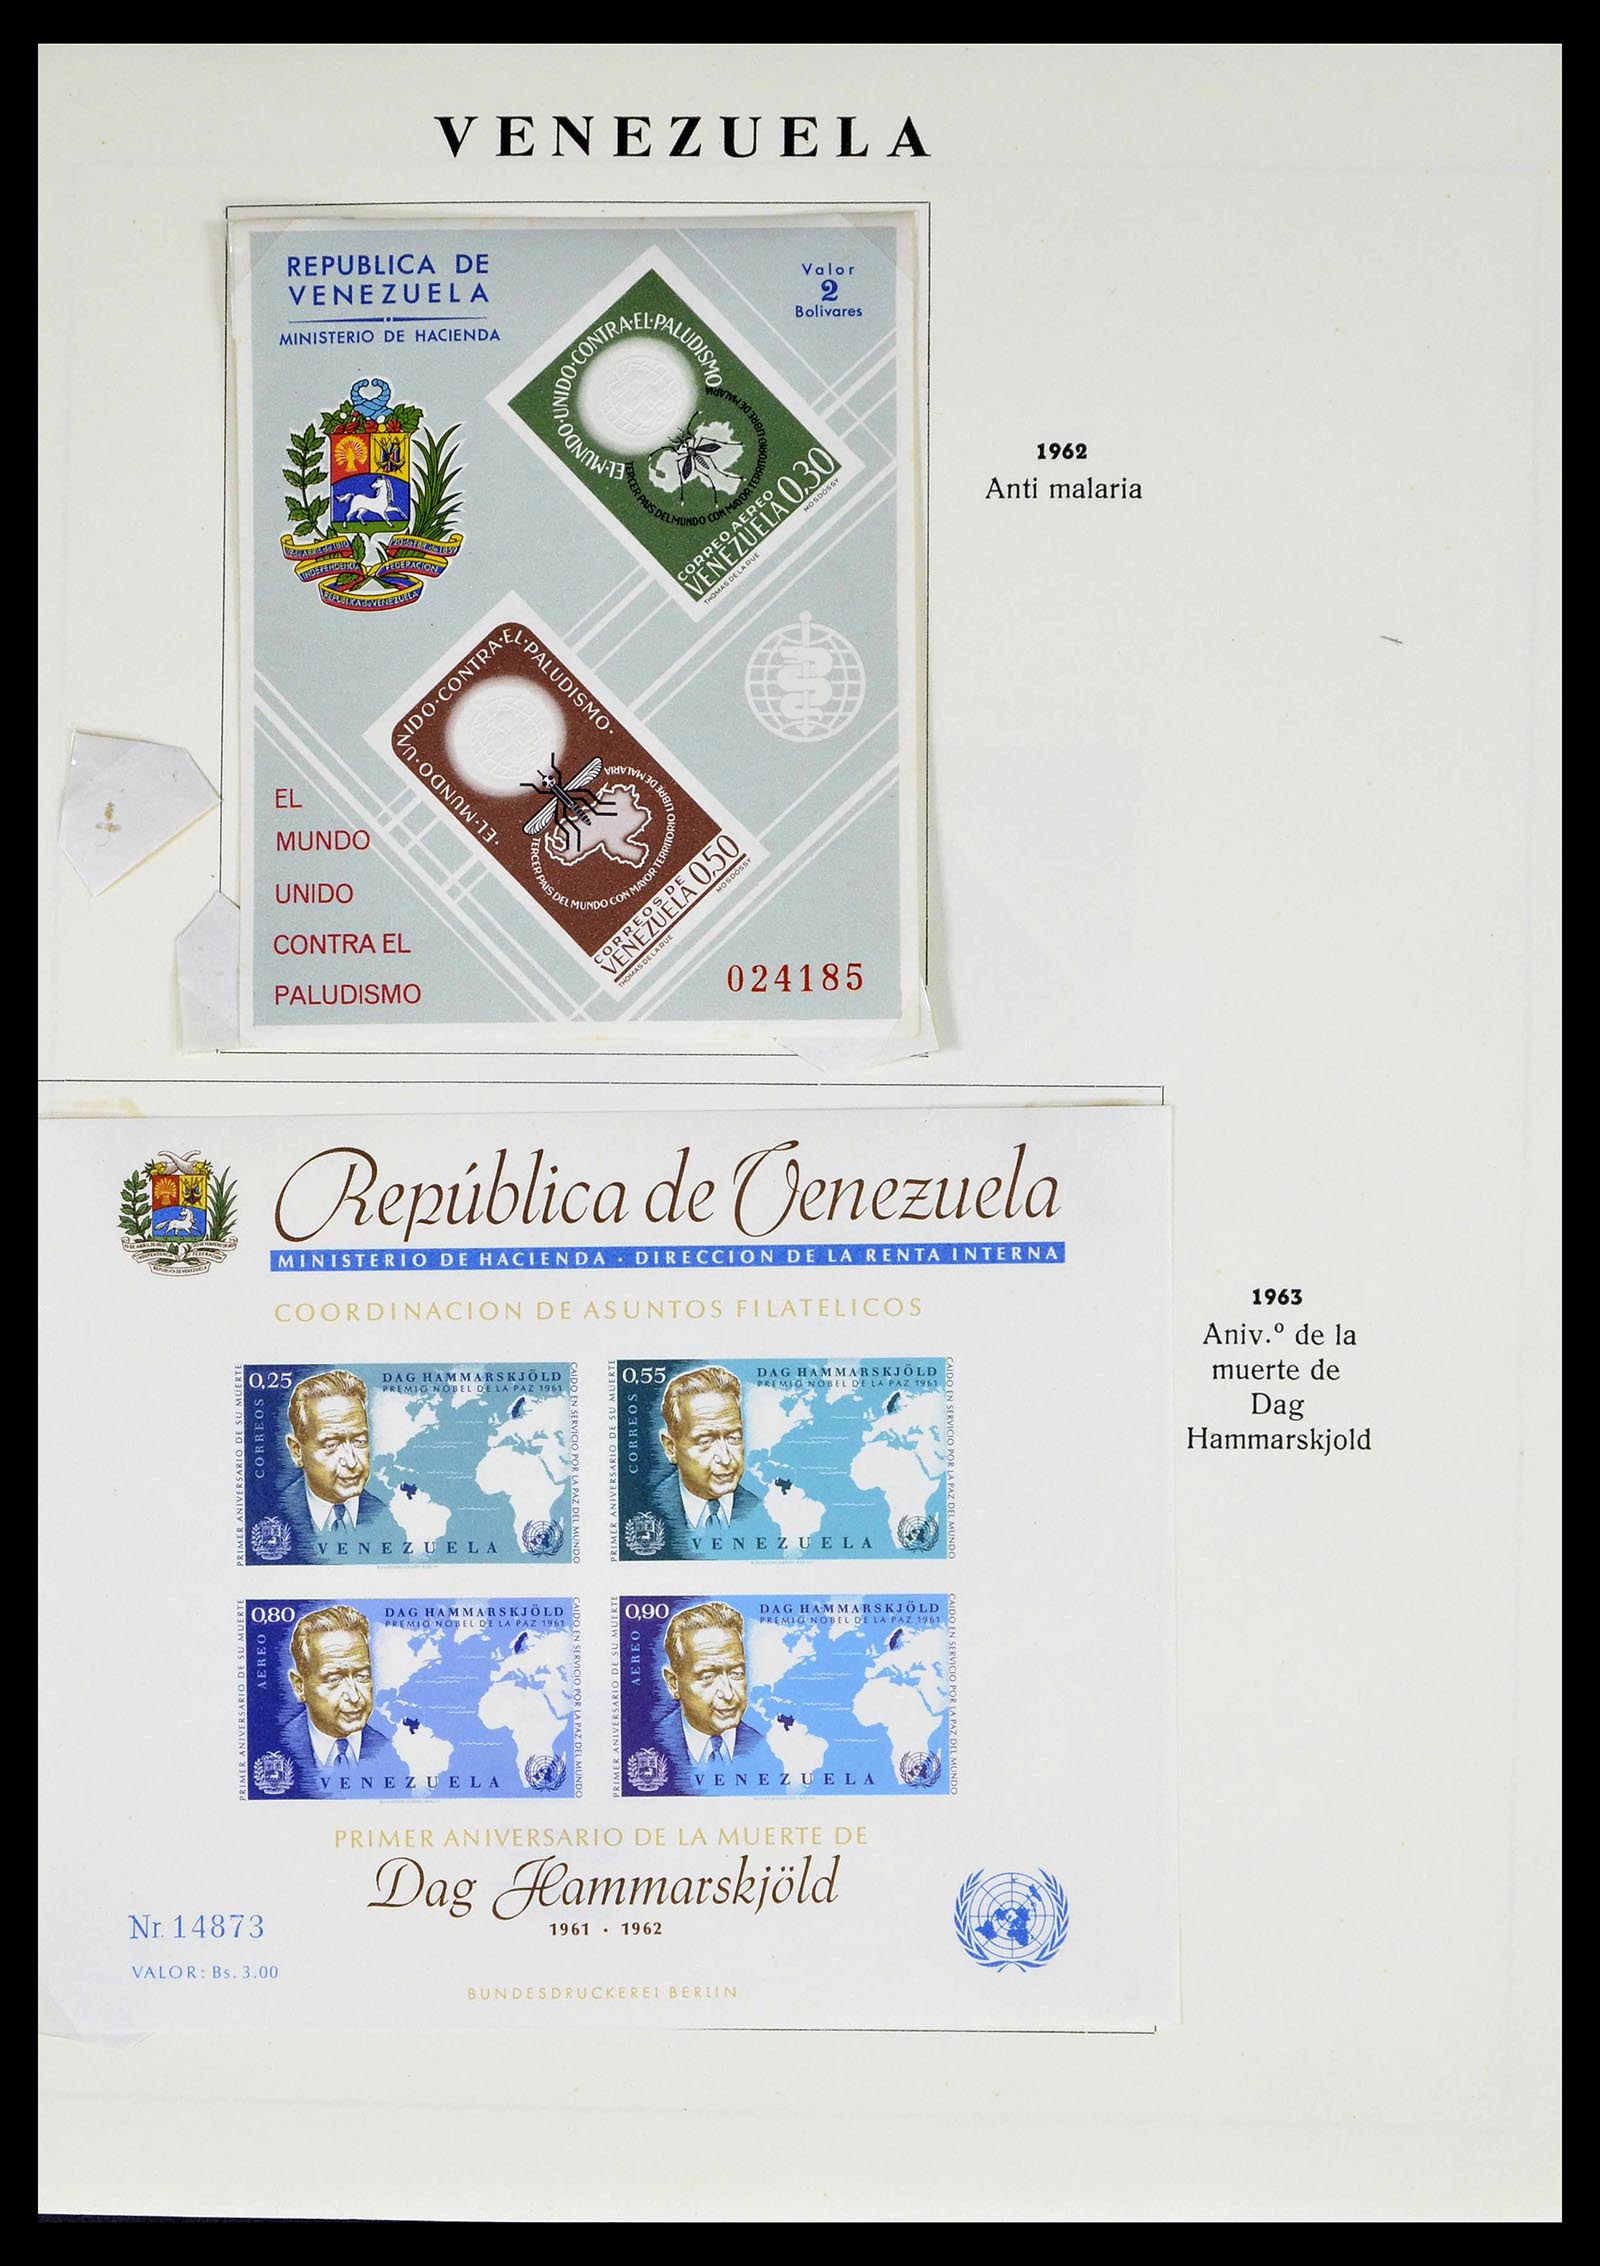 39223 0165 - Stamp collection 39223 Venezuela 1859-1984.